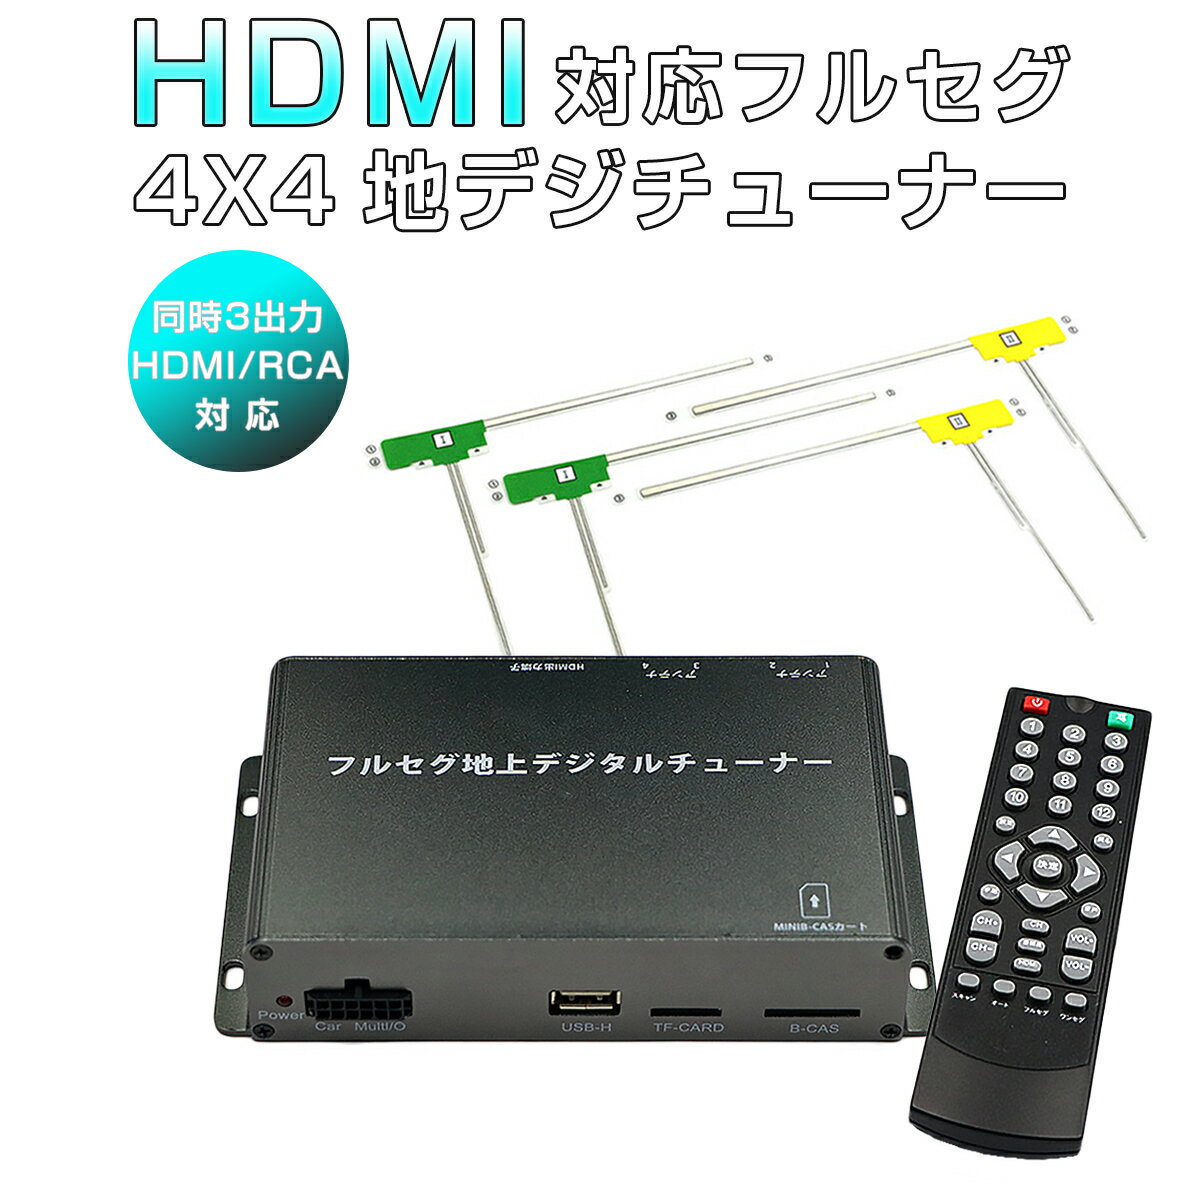 HONDA用の非純正品 コンチェルト 地デジチューナー カーナビ ワンセグ フルセグ HDMI 4x4 高性能 4チューナー 4アンテナ 自動切換 150km/hまで受信 高画質 古い車載TVやカーナビにも使える 12V/24V フィルムアンテナ miniB-CASカード付き 6ヶ月保証